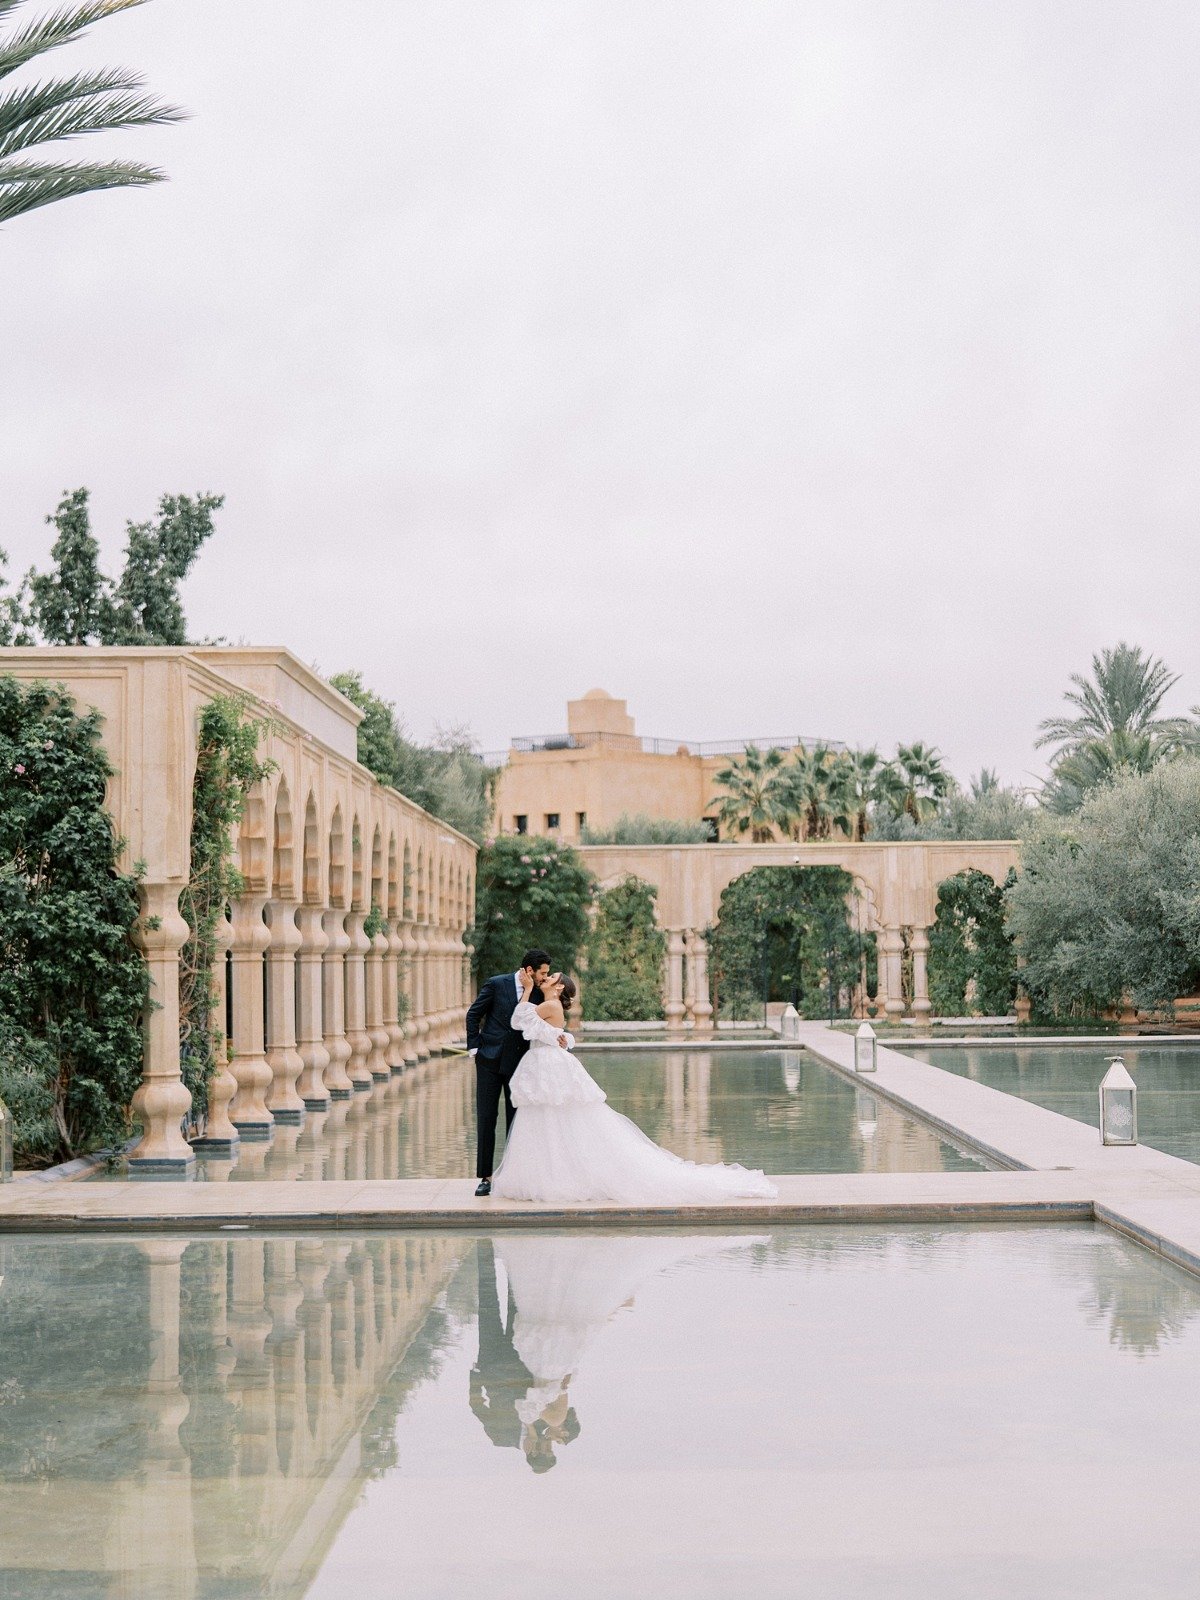 Marrakech palace wedding